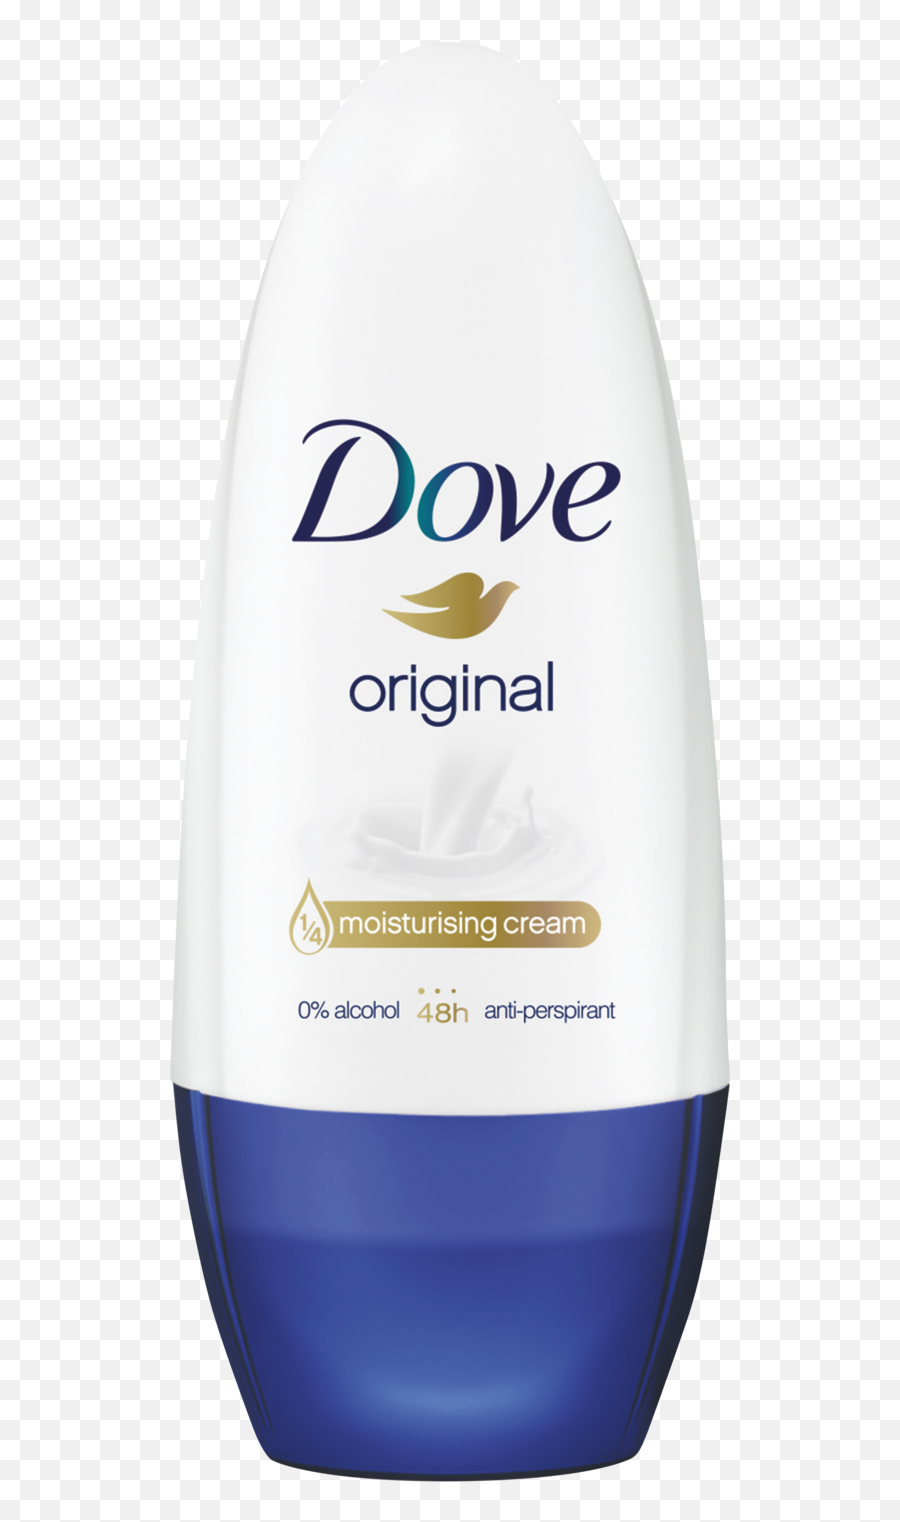 Original Roll - Dove Unscented Deodorant Roll Png,Deodorant Png